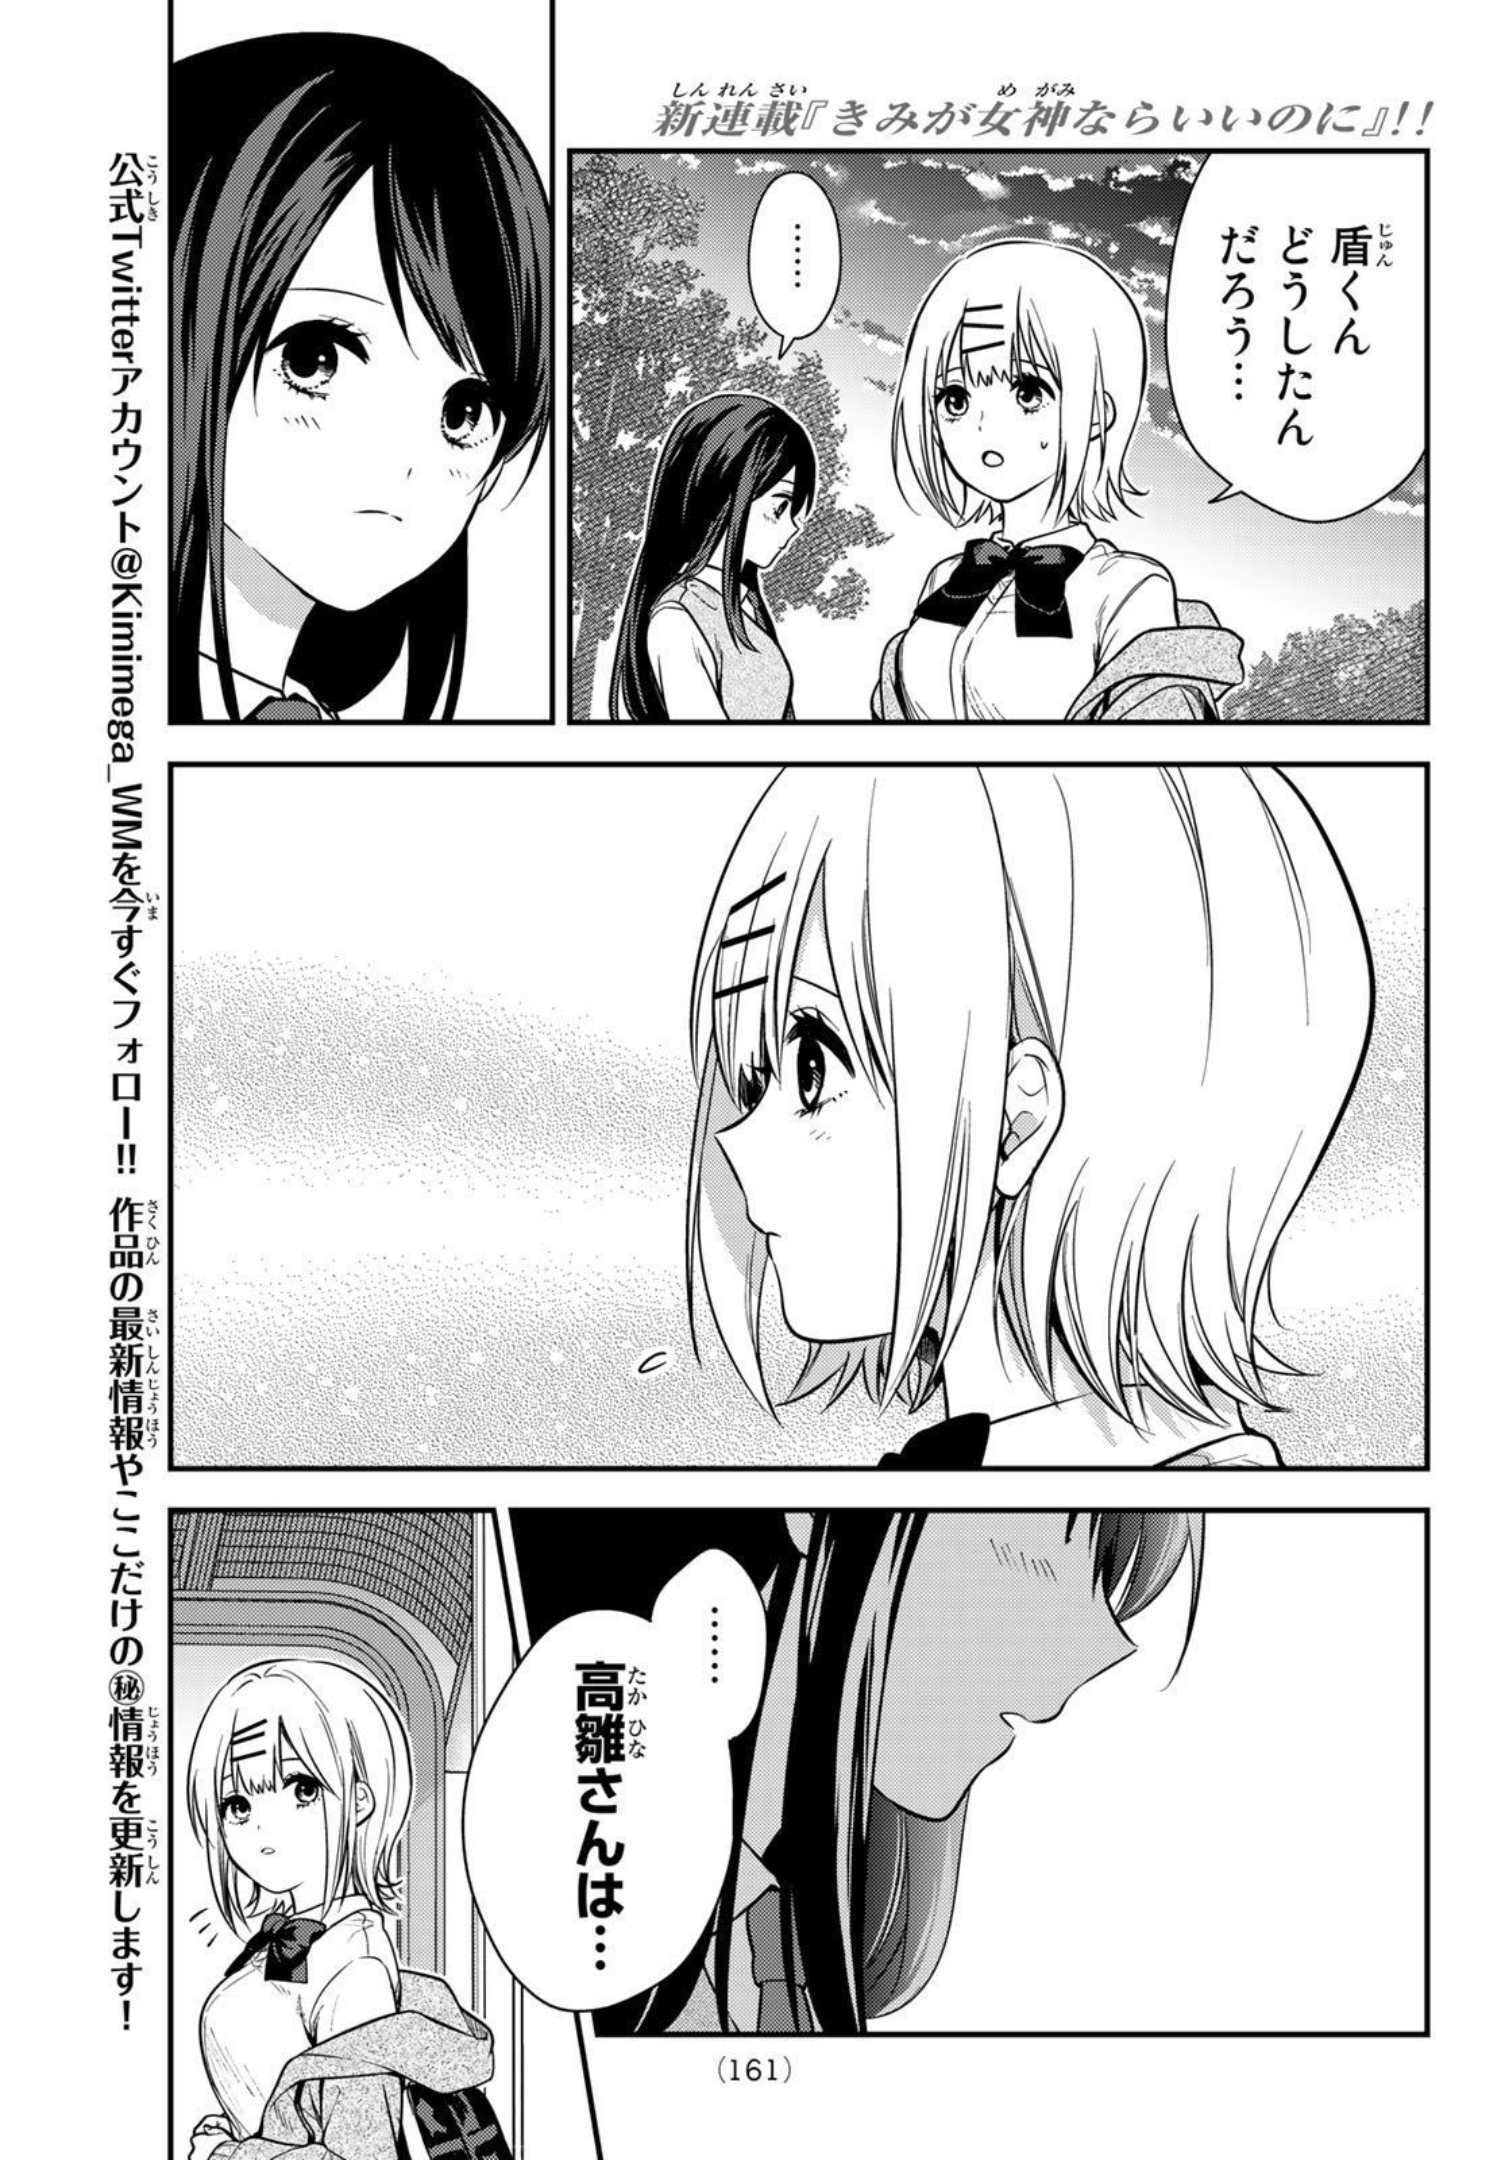 Kimi ga Megami Nara Ii no ni (I Wish You Were My Muse) - Chapter 003 - Page 27